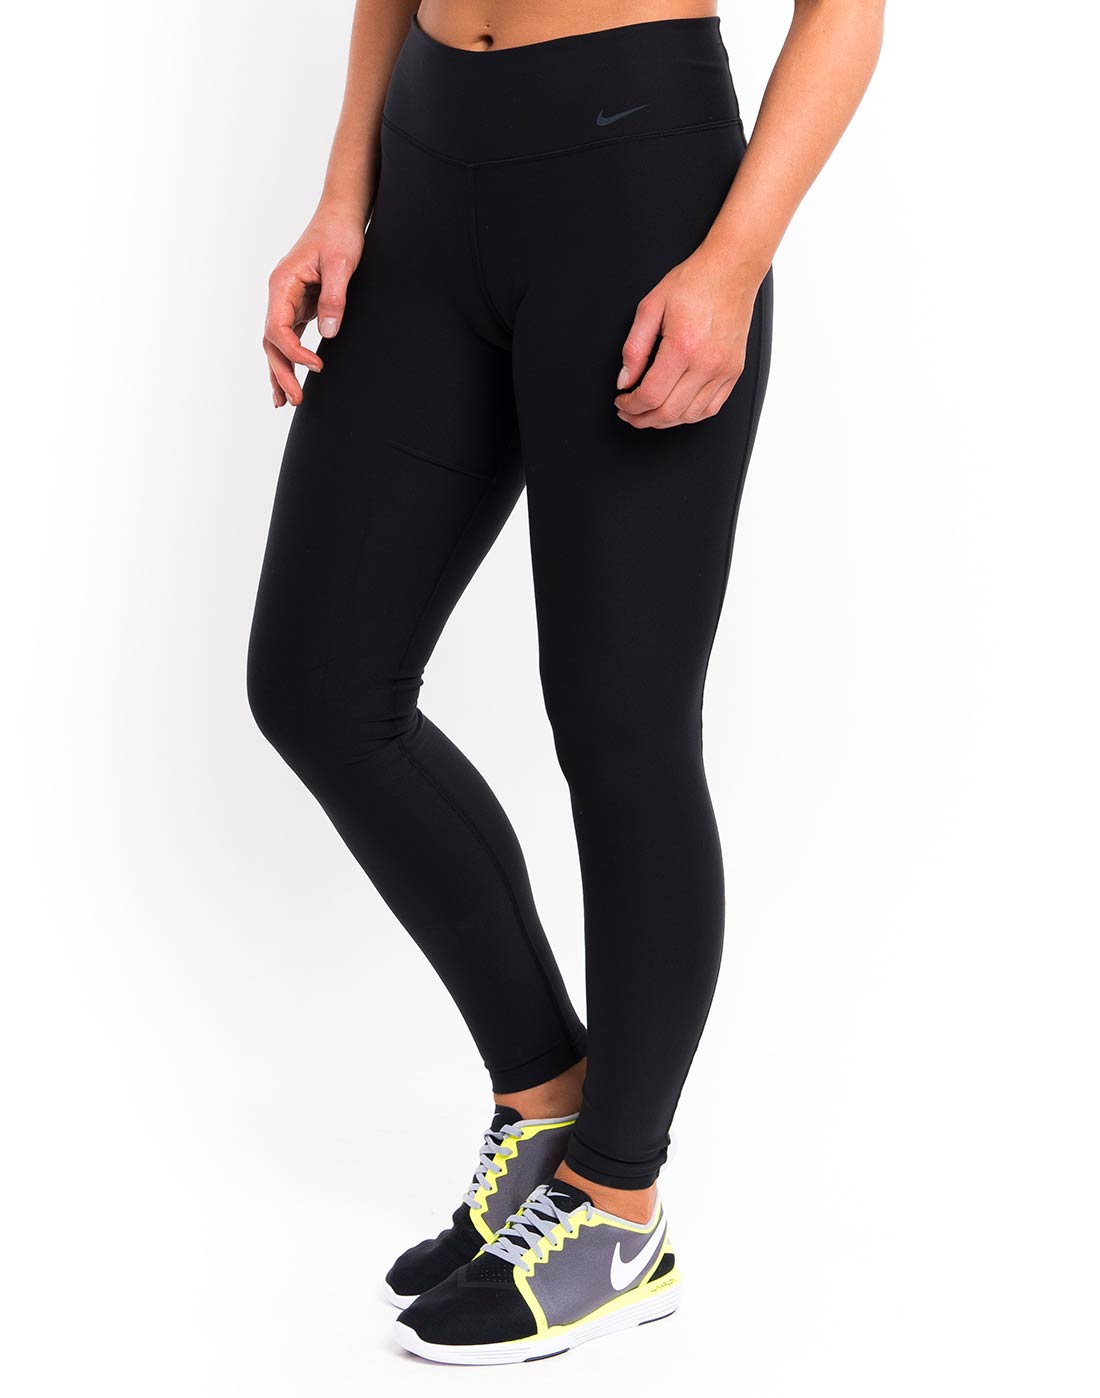 estrecho Menos que tranquilo Nike Womens Legend Tight Pant - Black | Life Style Sports IE